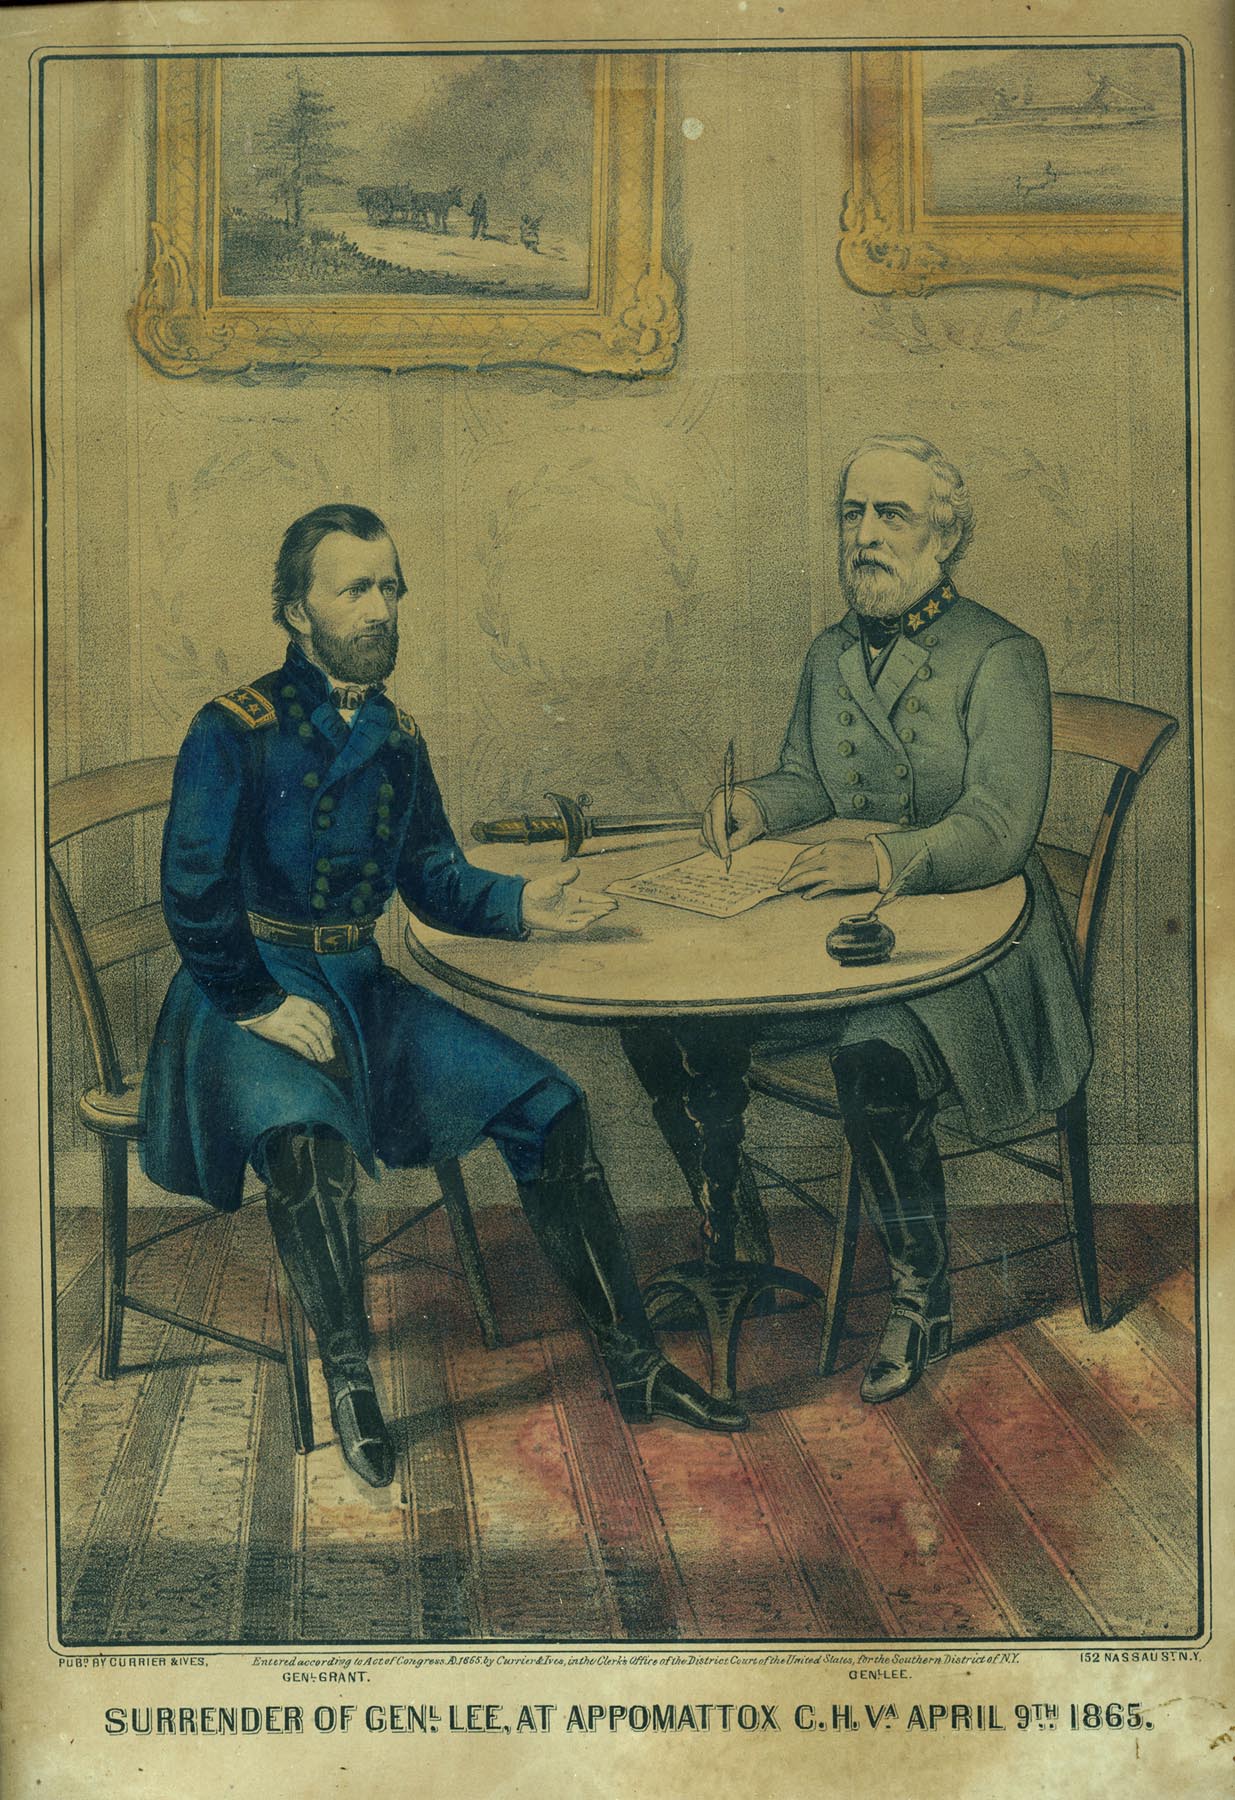 Surrender of Genl. Lee at Appomattox C.H. Va. April 9th 1865
Currier & Ives
